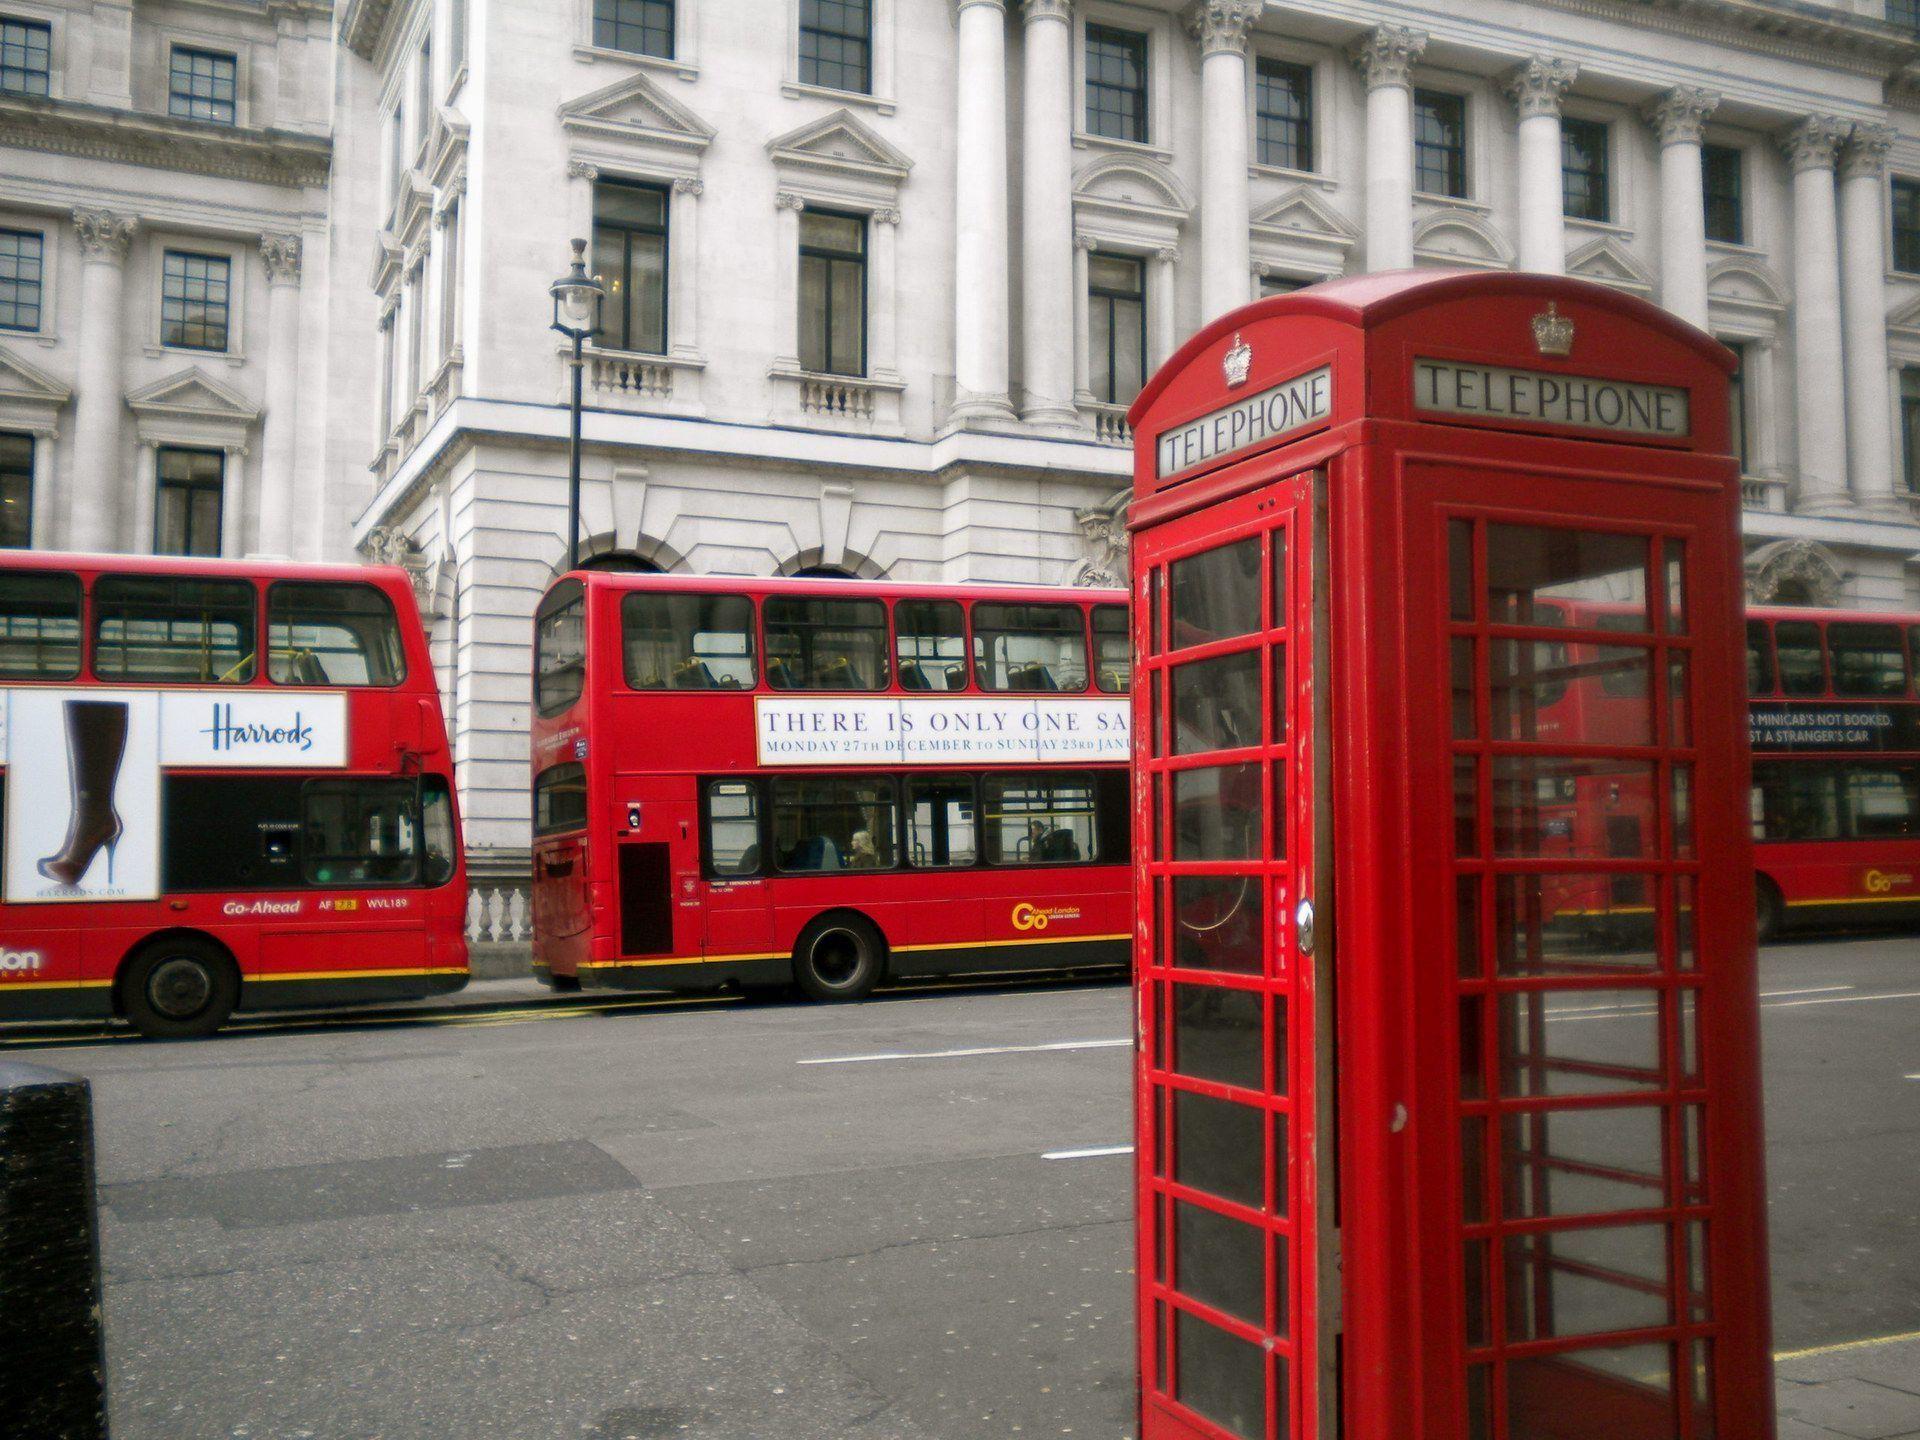 English phone booth, London, England